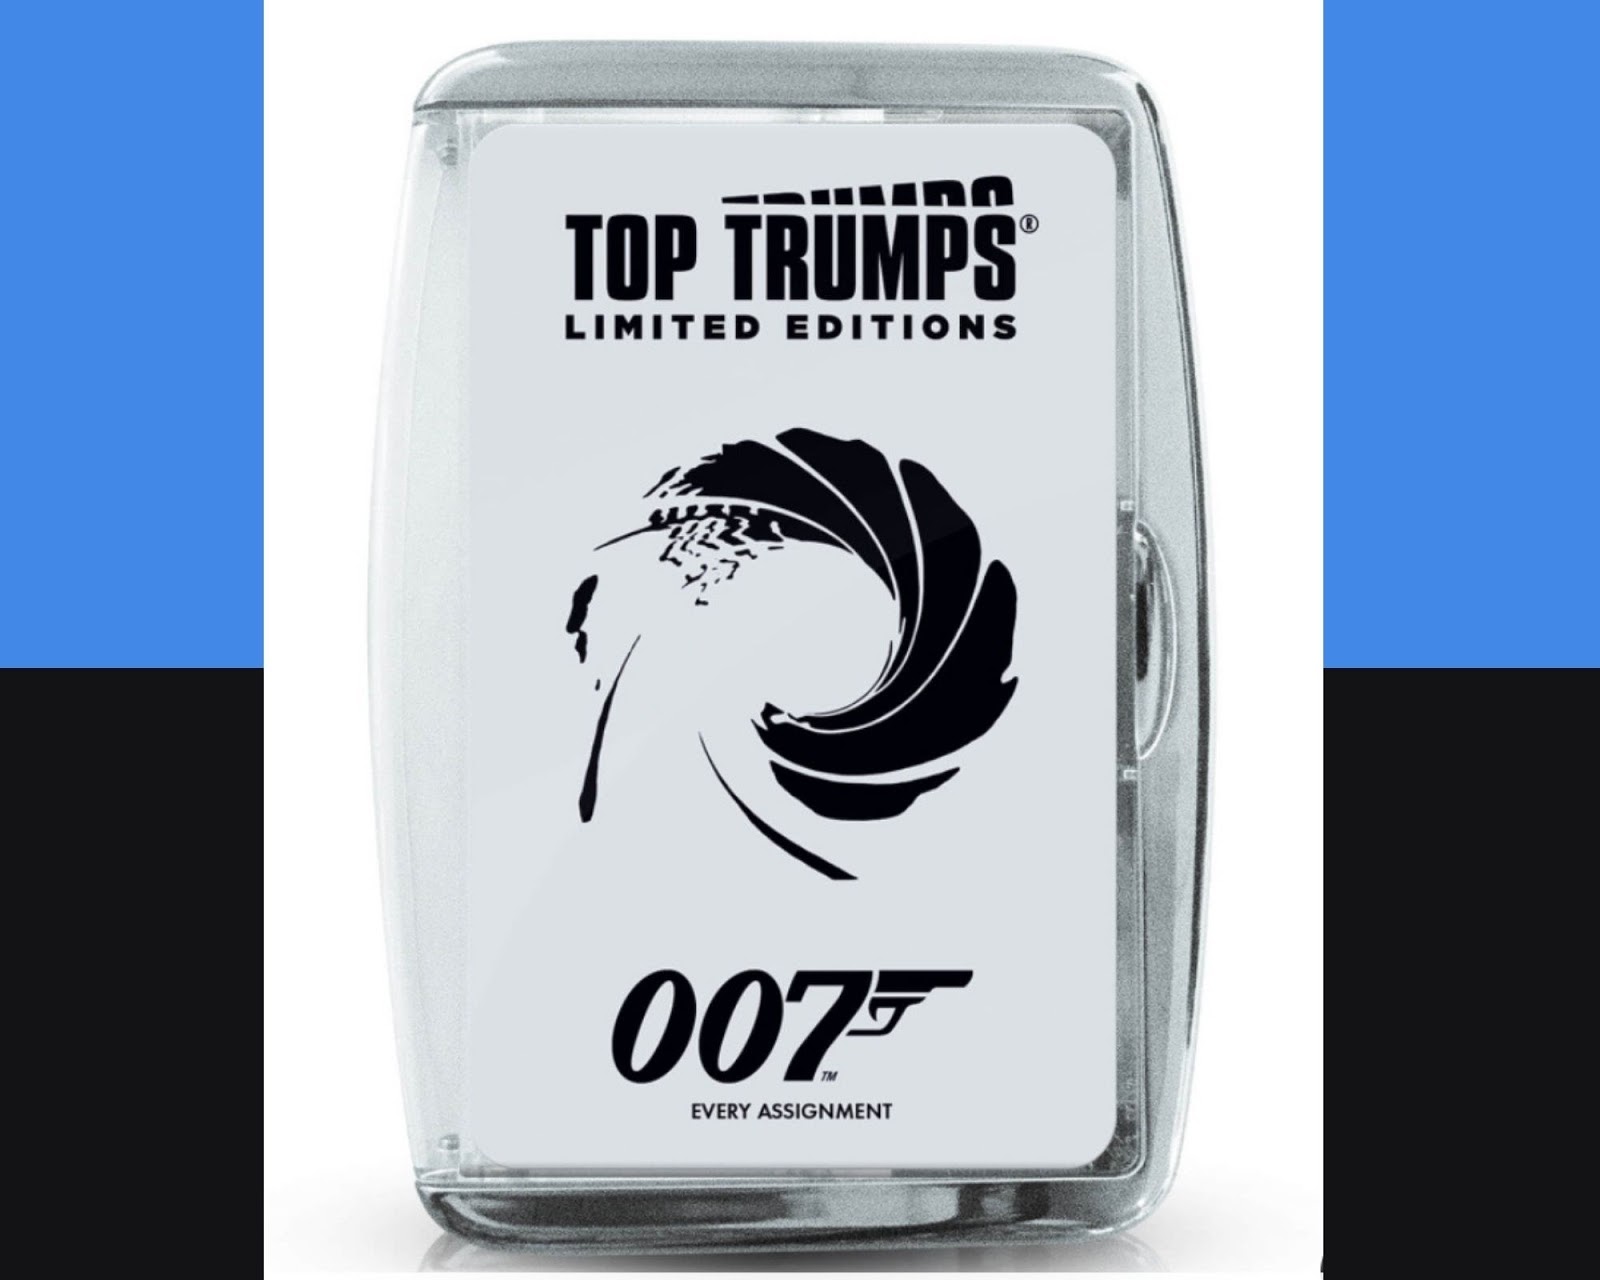 Top Trumps 007 game